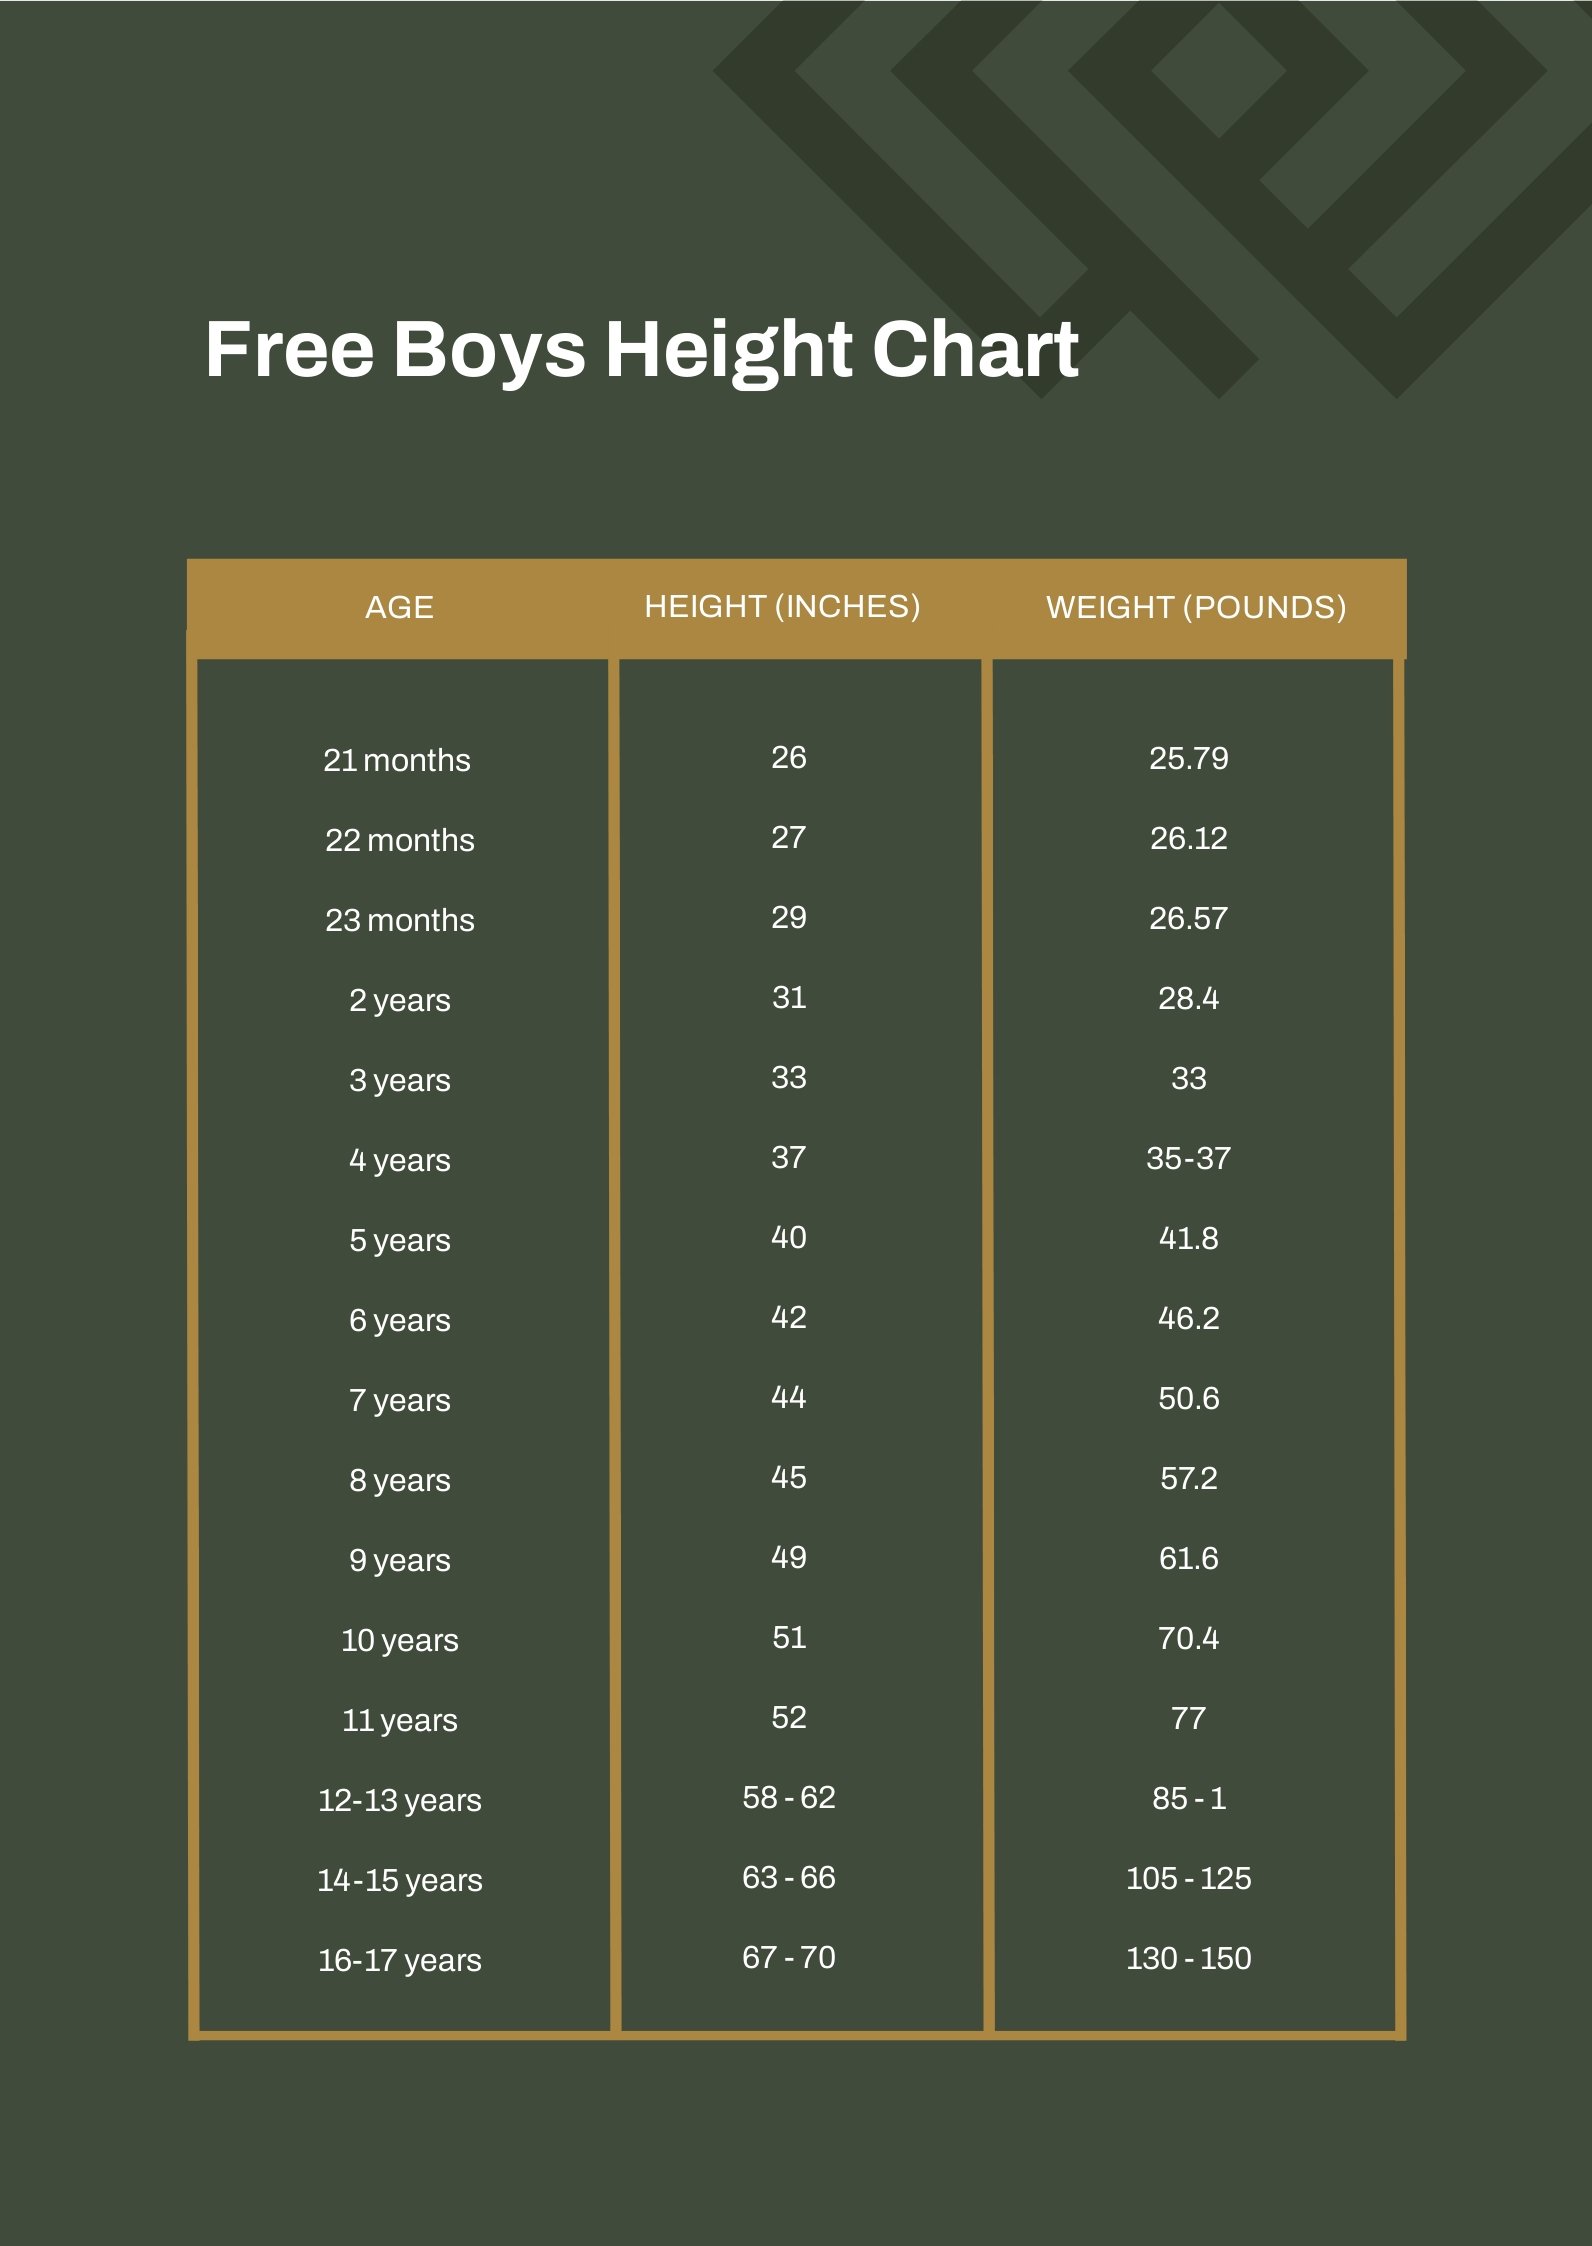 Free Boys Height Chart